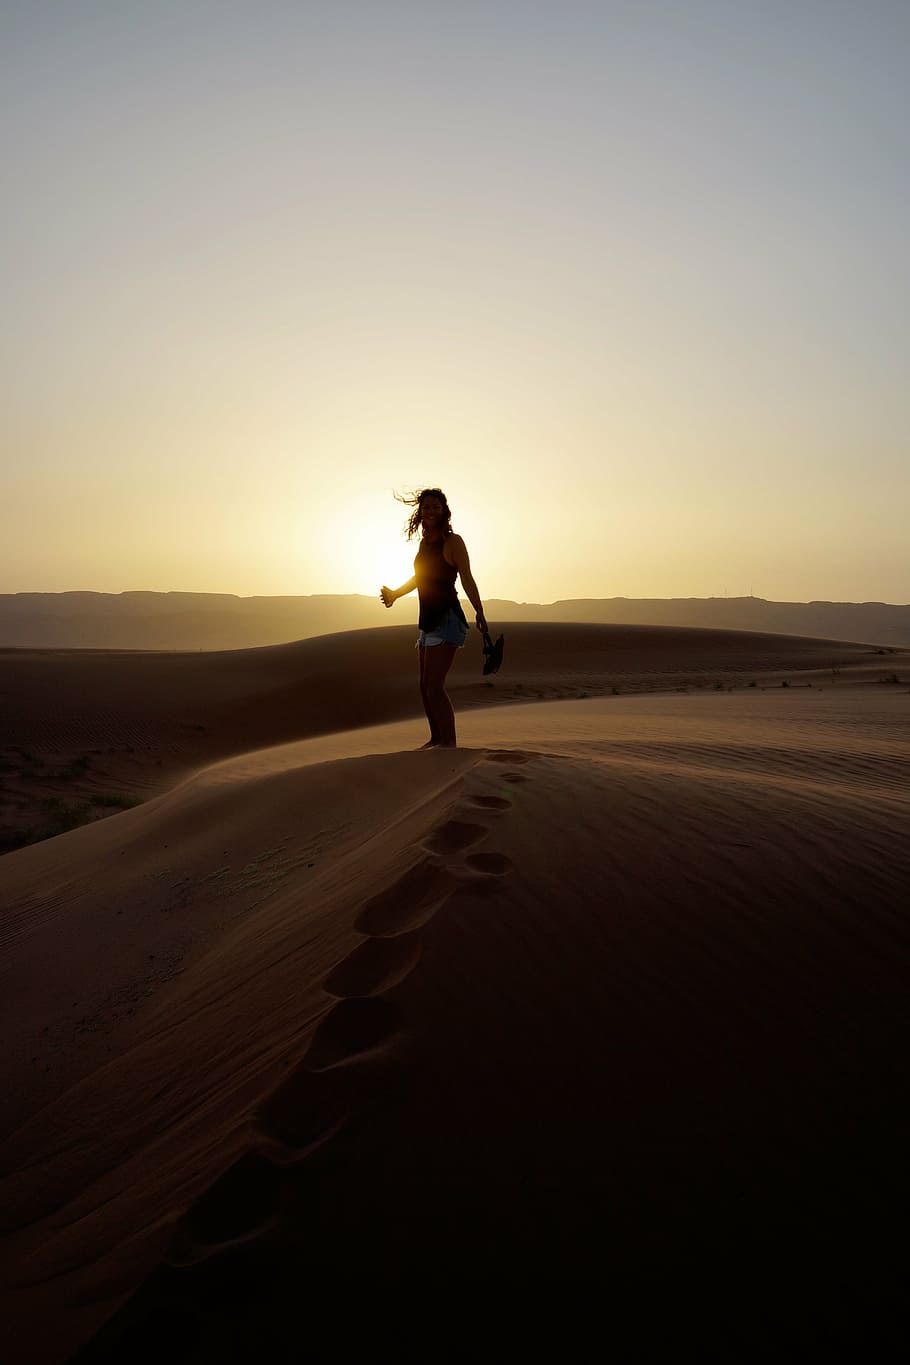 foto siluet, wanita, berdiri, bukit pasir, bayangan hitam, orang, gurun, matahari terbit, gadis, orang-orang